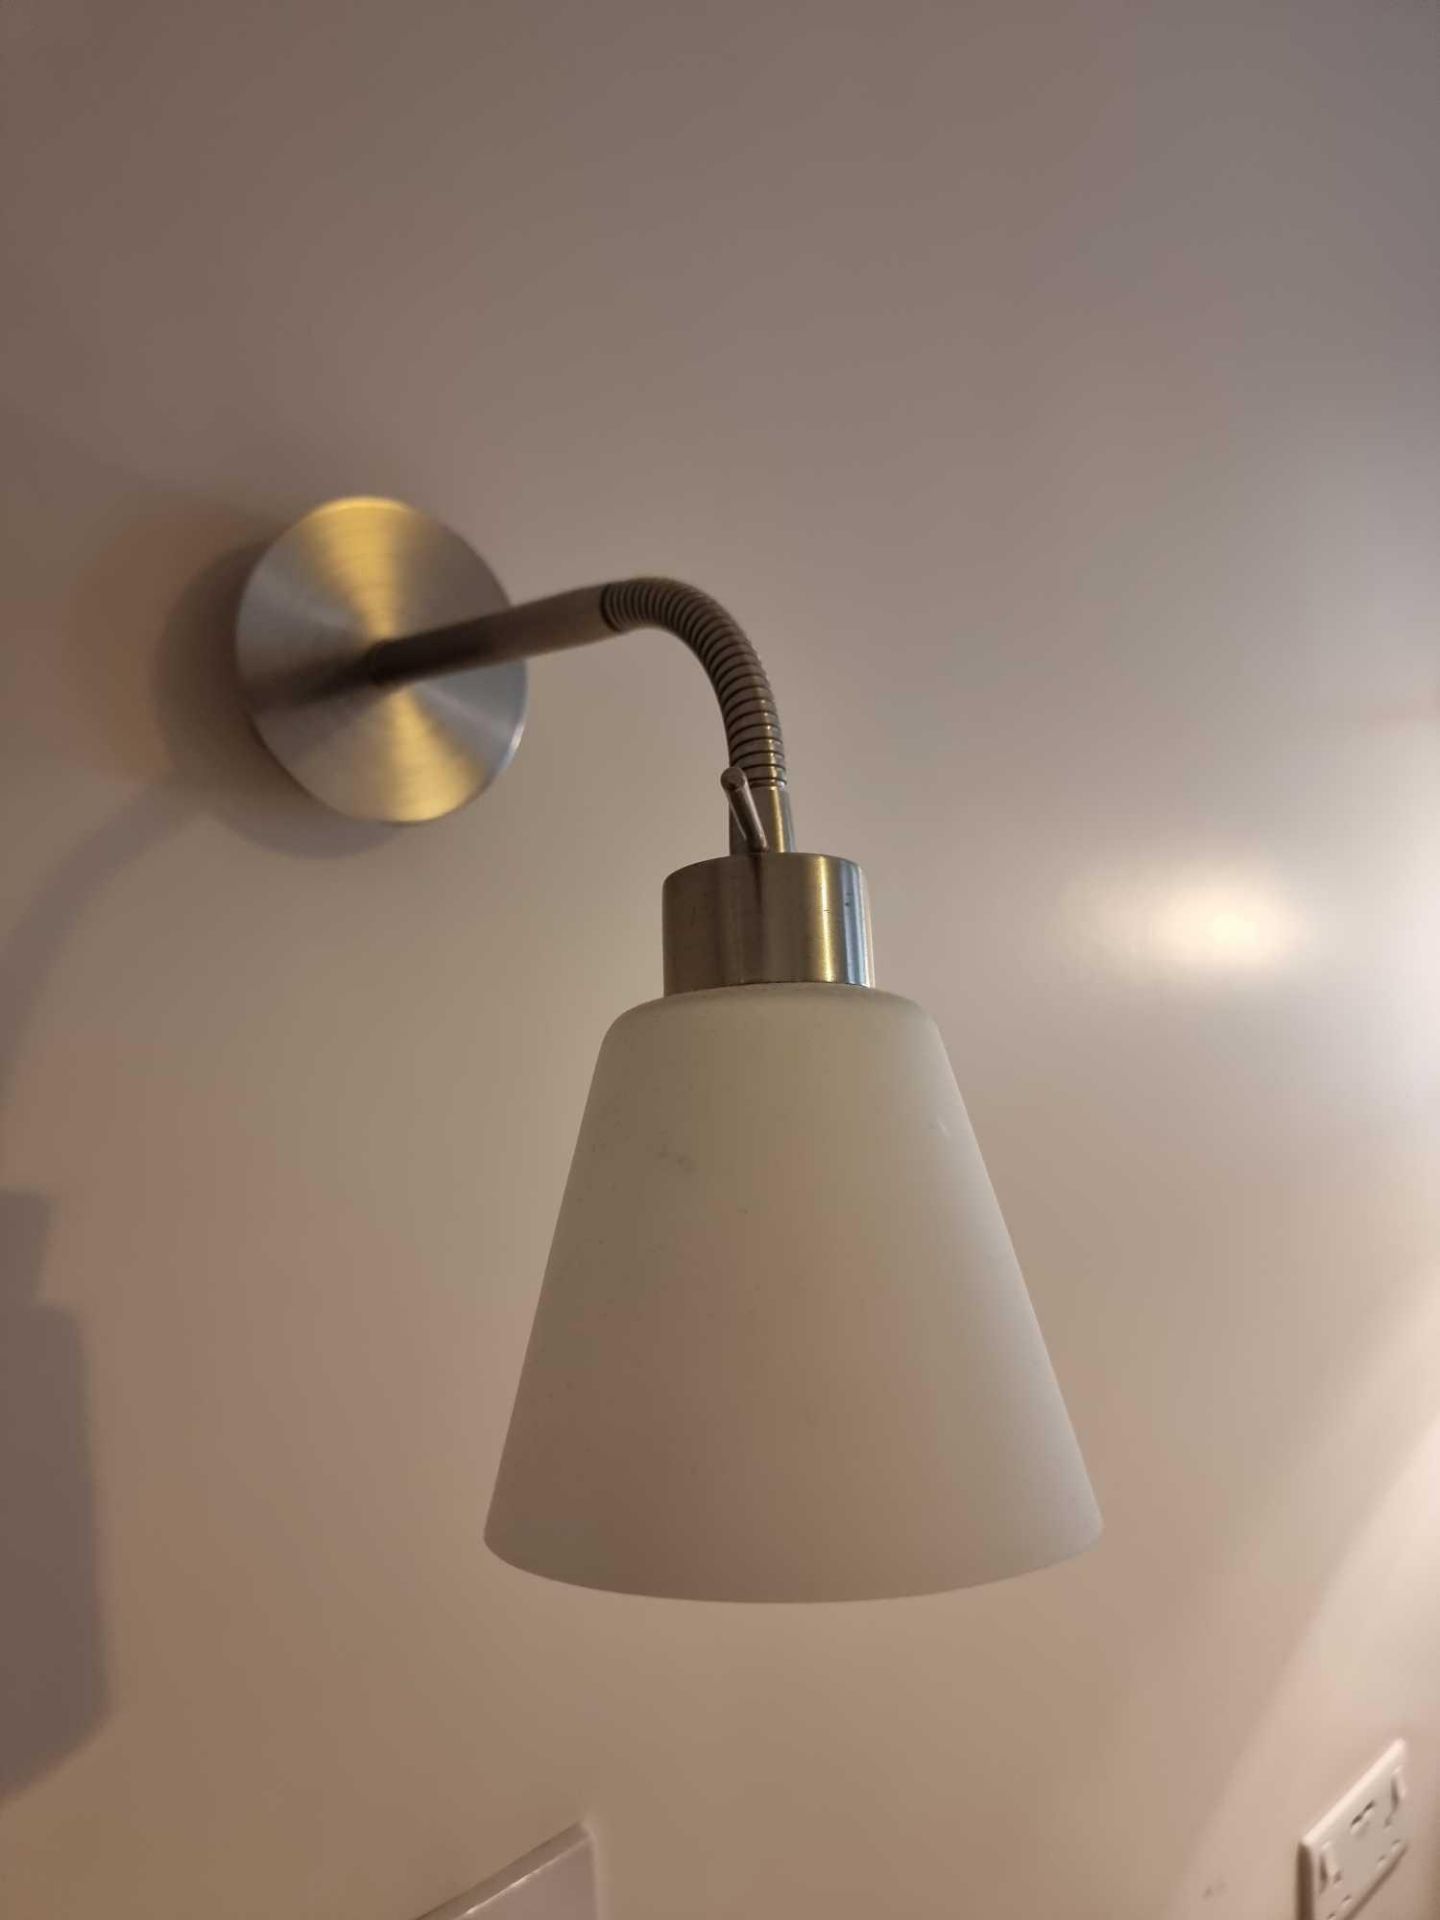 2 X Flex Metal Wall Light. Modern Metal Flexible Wall Light With Glass Opaque Shade A Great Addition